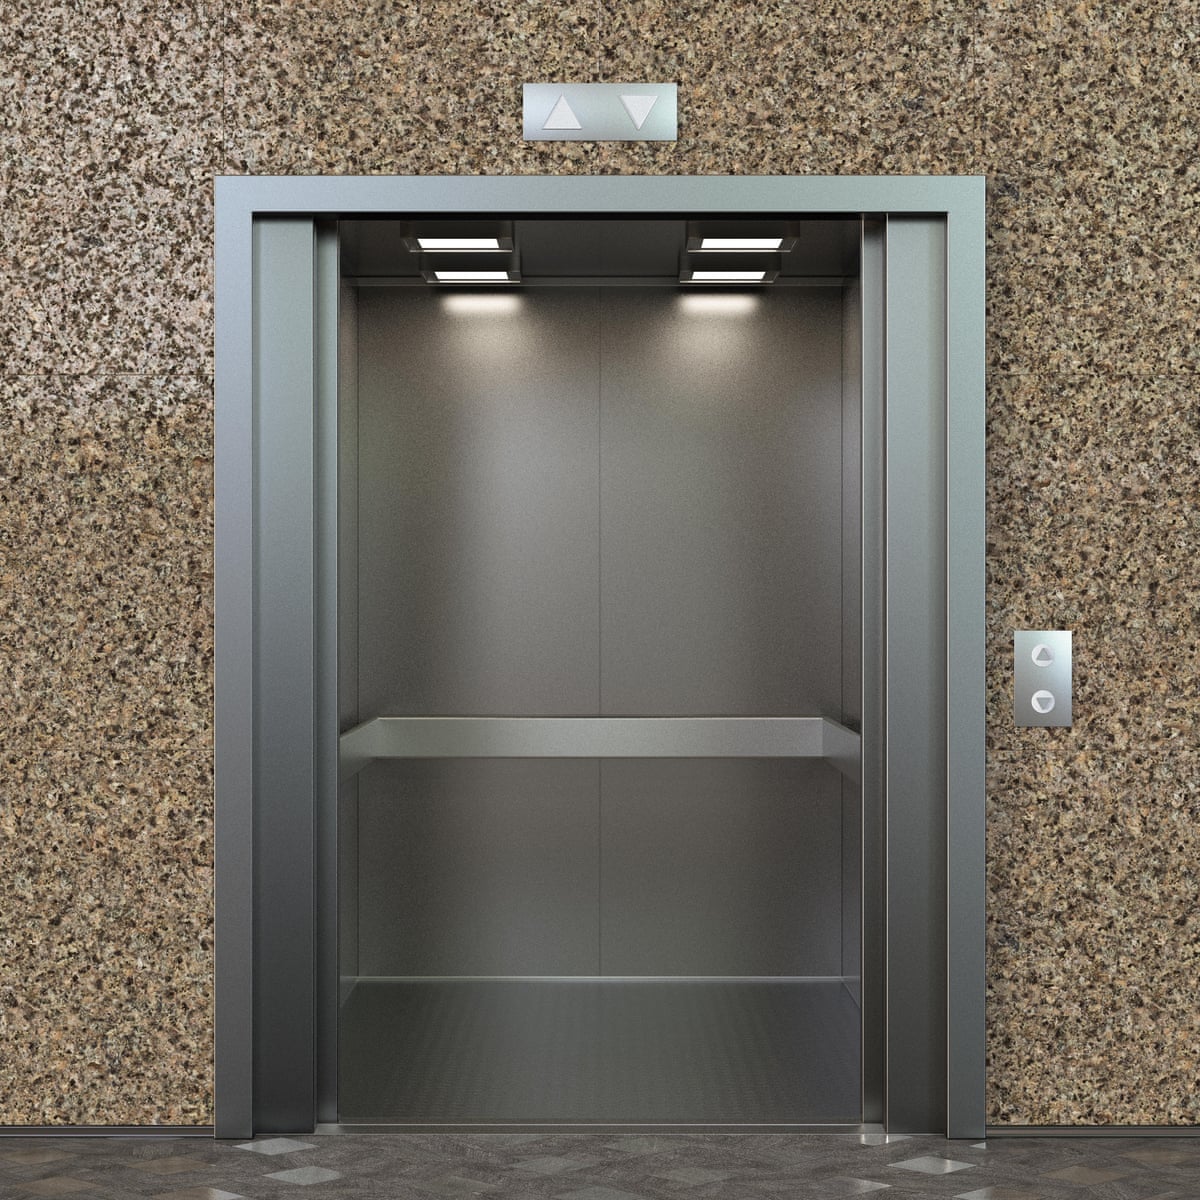 Health Ministry bans use of elevators on Tuesdays, Thursdays